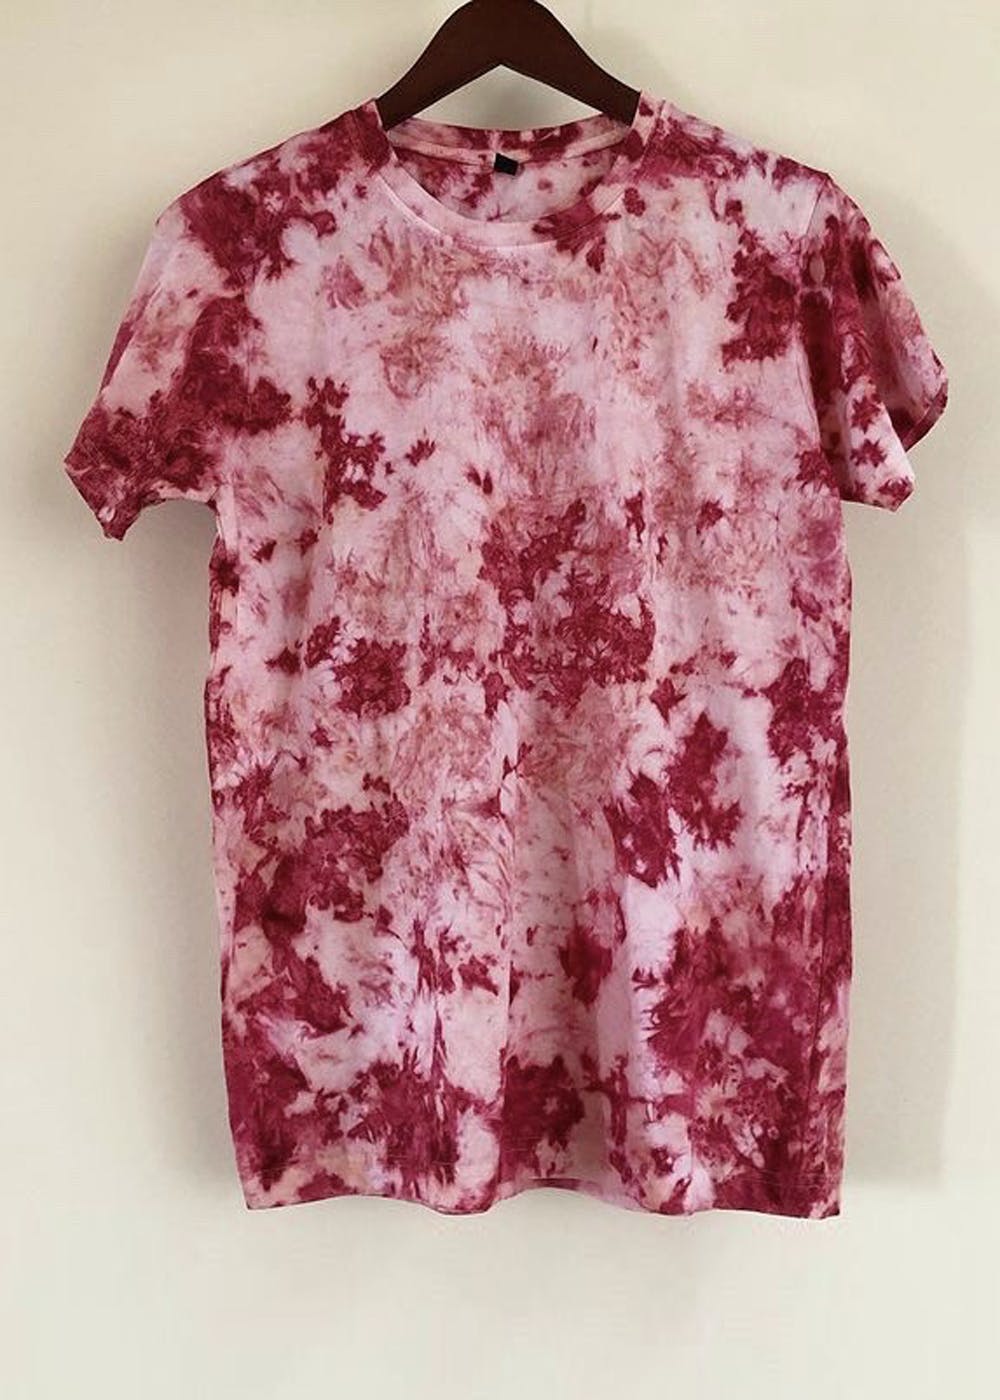 Get Pink Scrunch Tie-Dye T-Shirt at ₹ 420 | LBB Shop